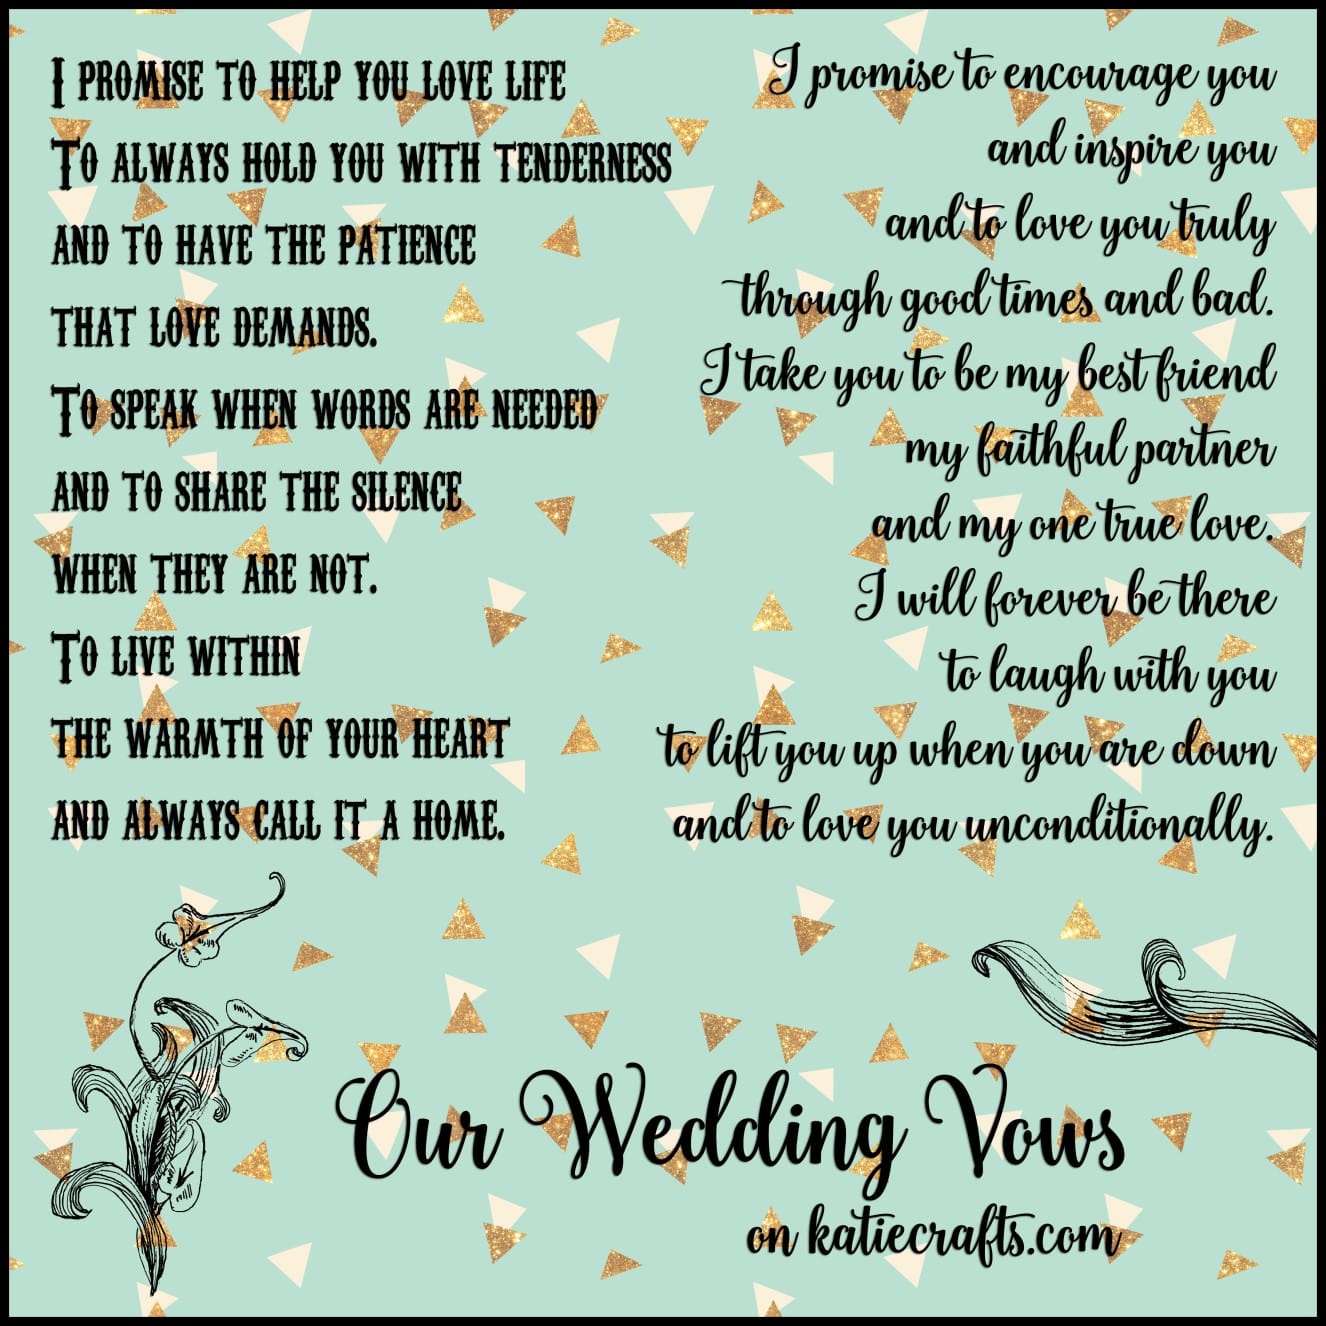 Words for Wednesday: Wedding Vows on Katie Crafts; https://www.katiecrafts.com